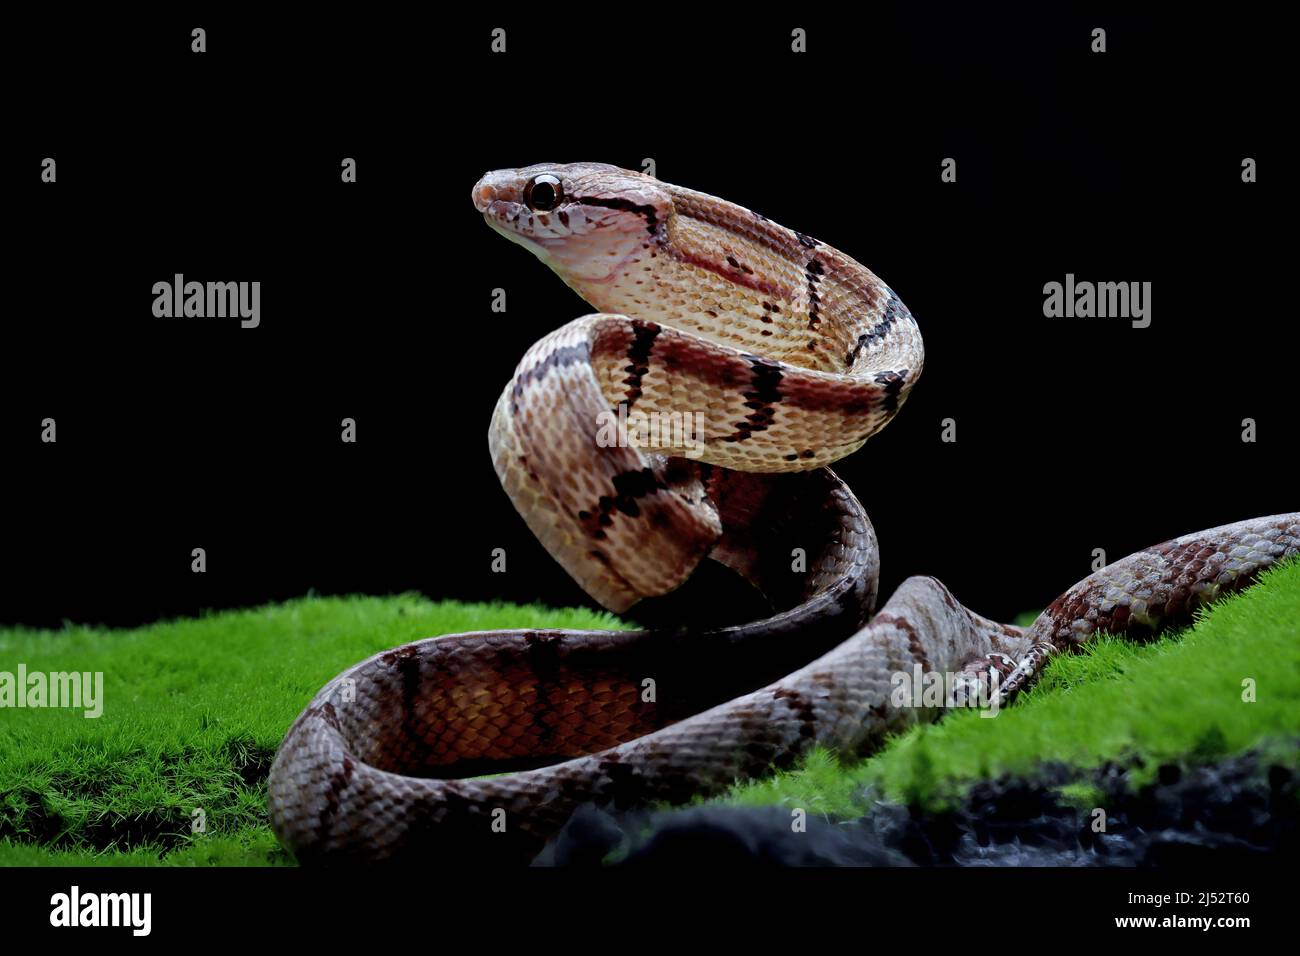 Boiga cynodon snake on moss ready to strike, Indonesia Stock Photo